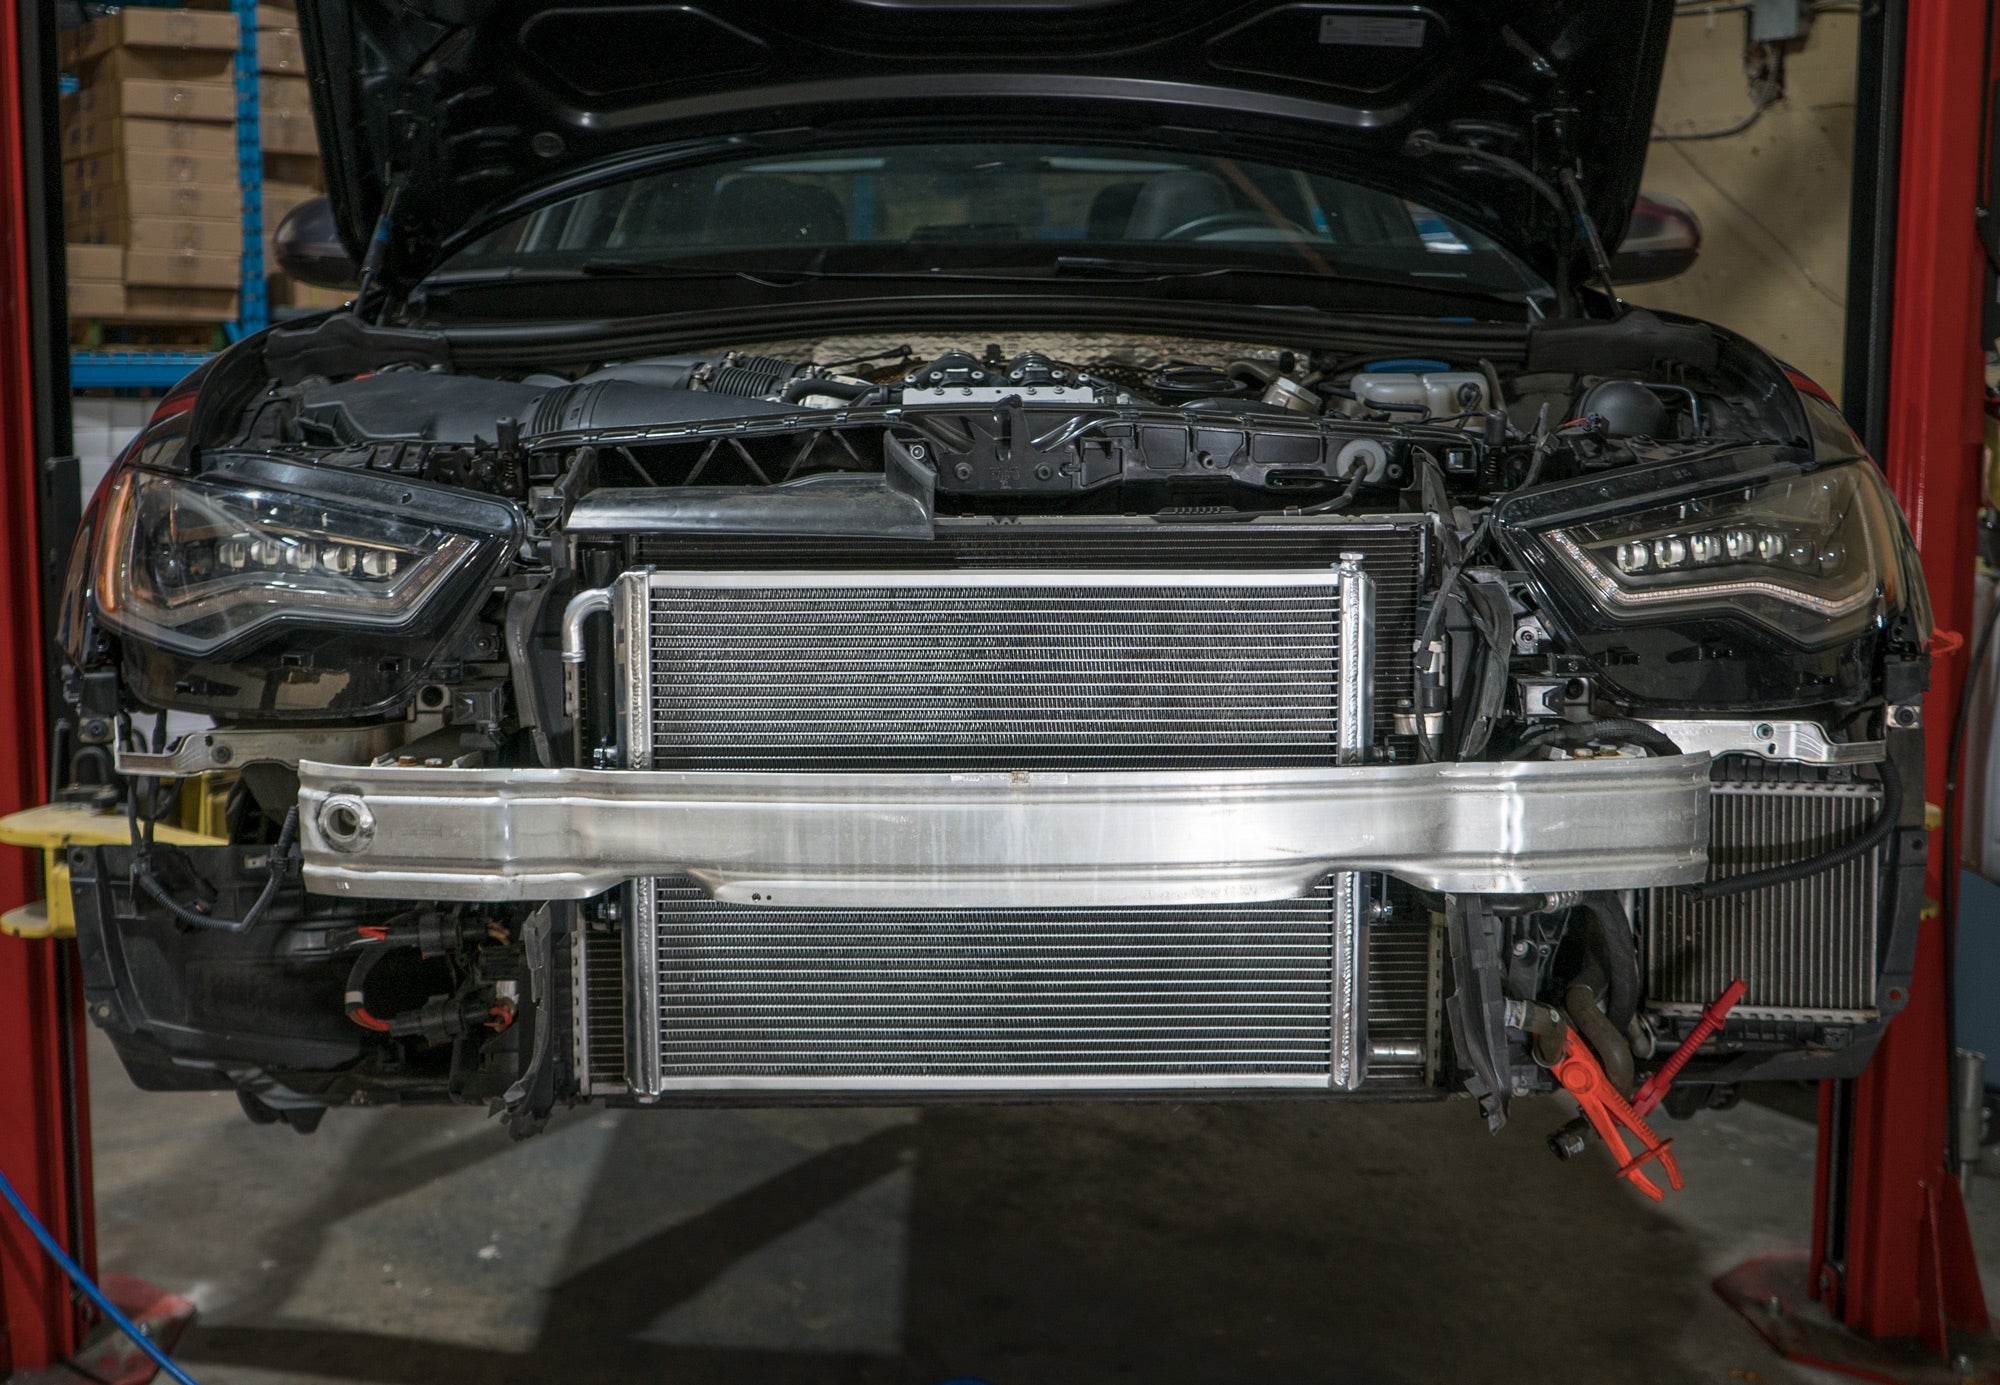 Audi A4 3.0 TDI Turbo upgrade options